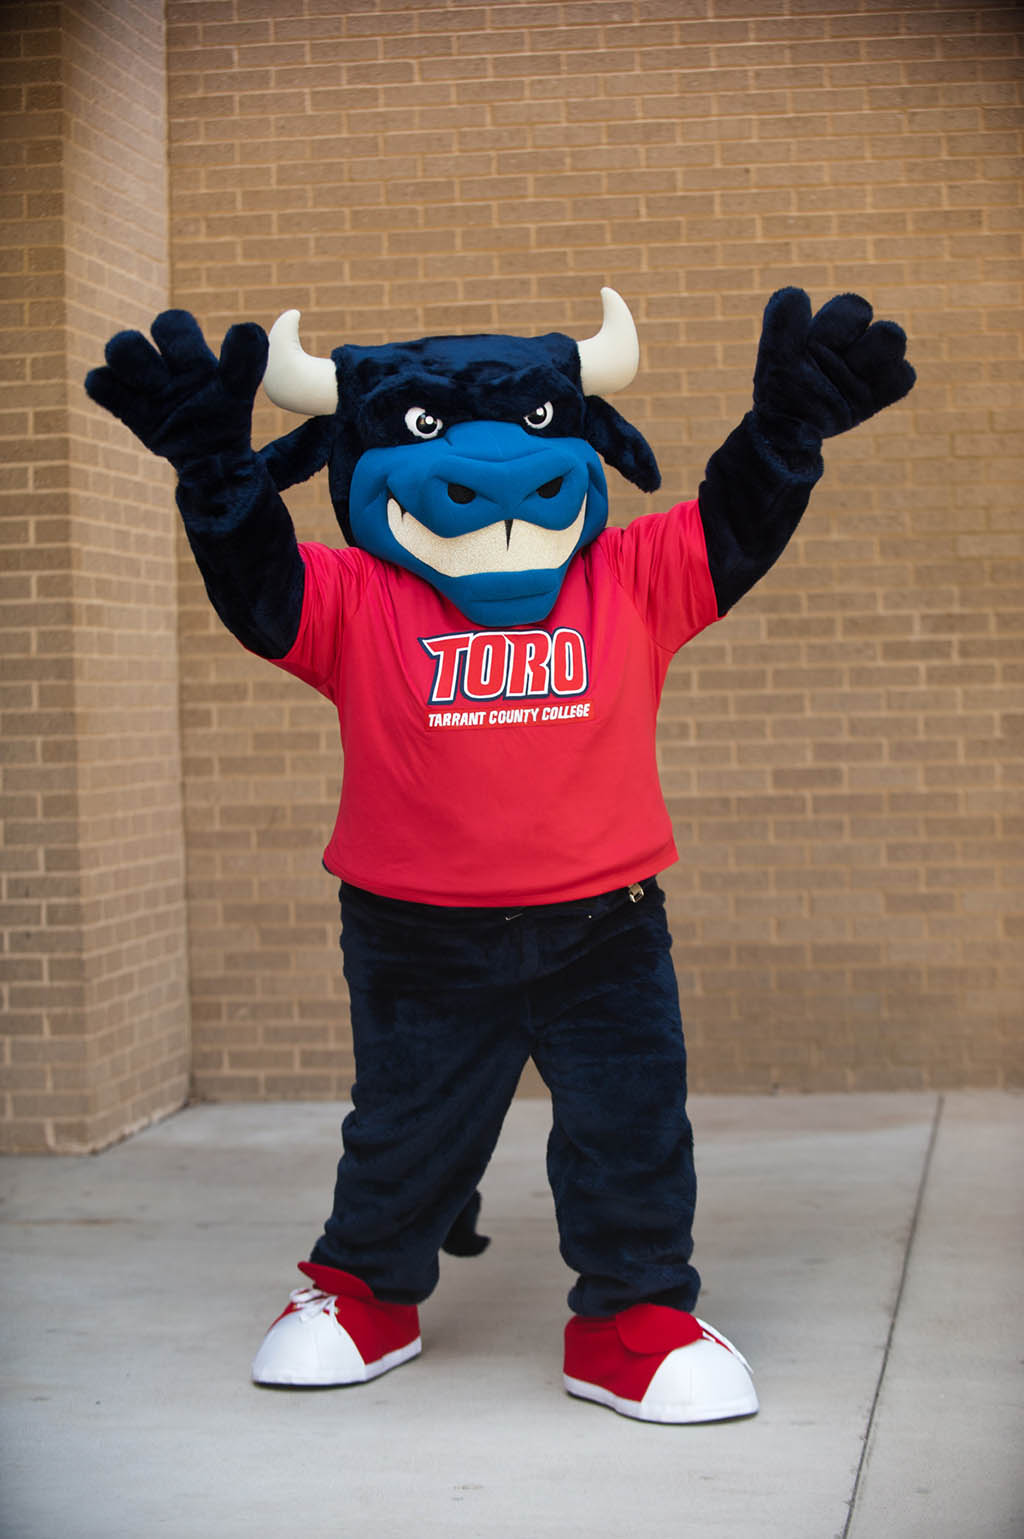 Toro, the TCC mascot